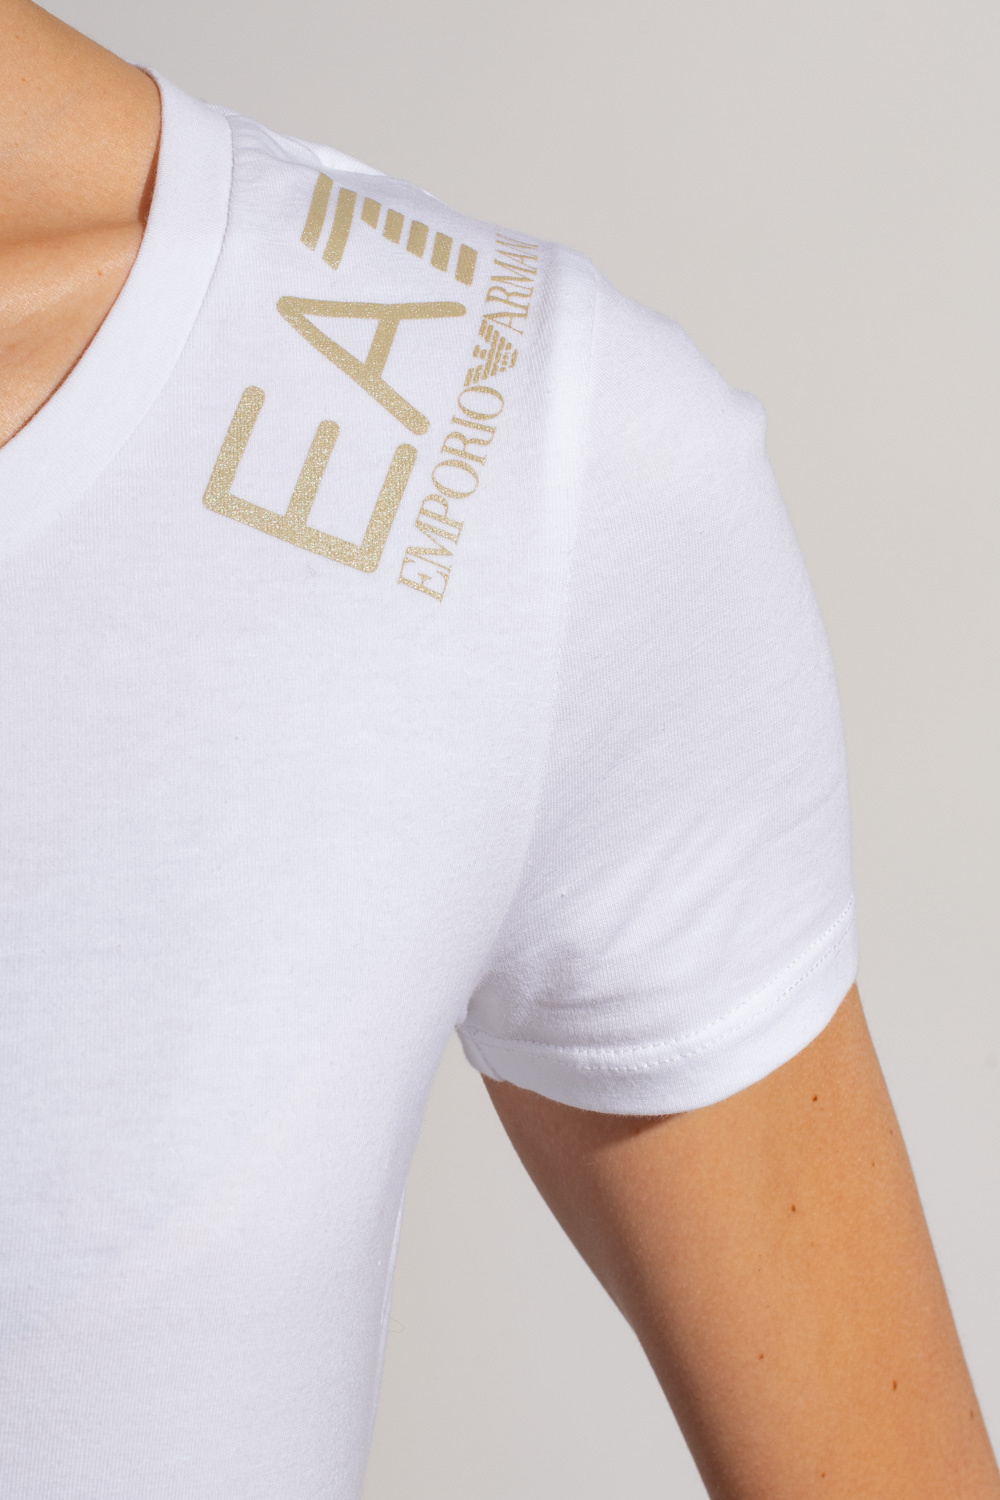 EA7 Emporio Armani Emporio Armani short sleeve T-shirt Schwarz